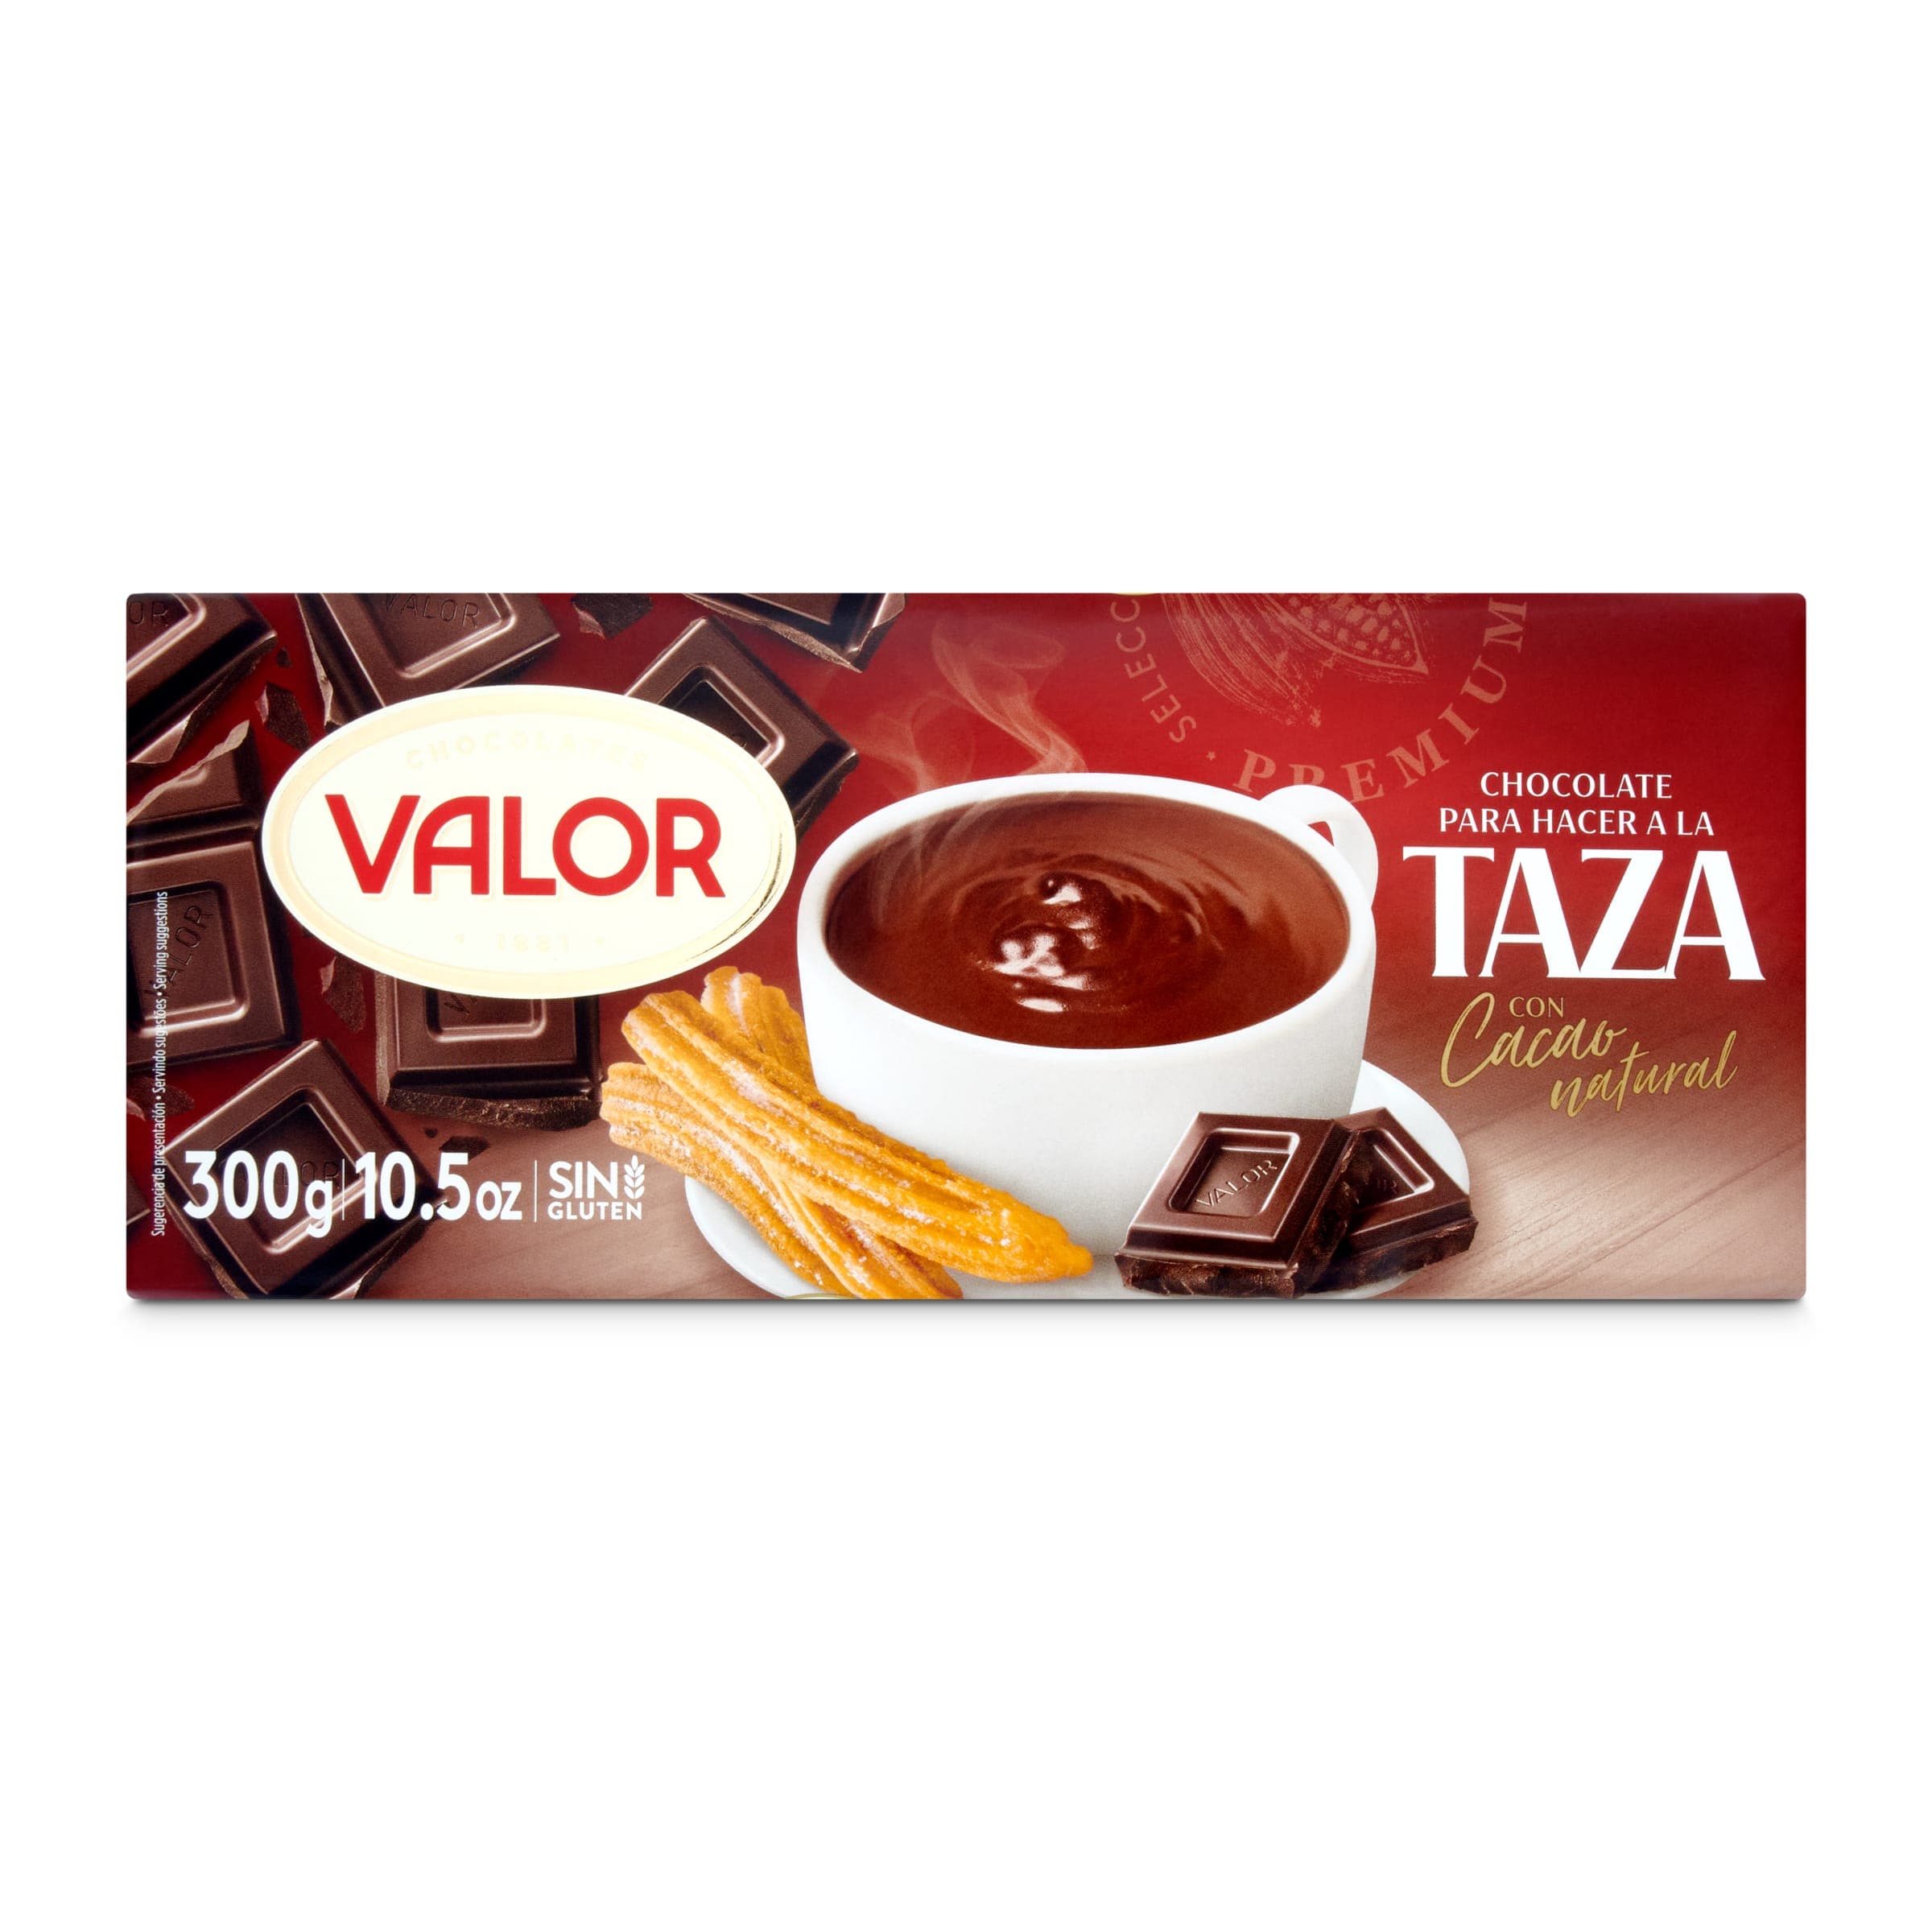 Chocolate para hacer a la taza VALOR 300 GR - Supermercados DIA